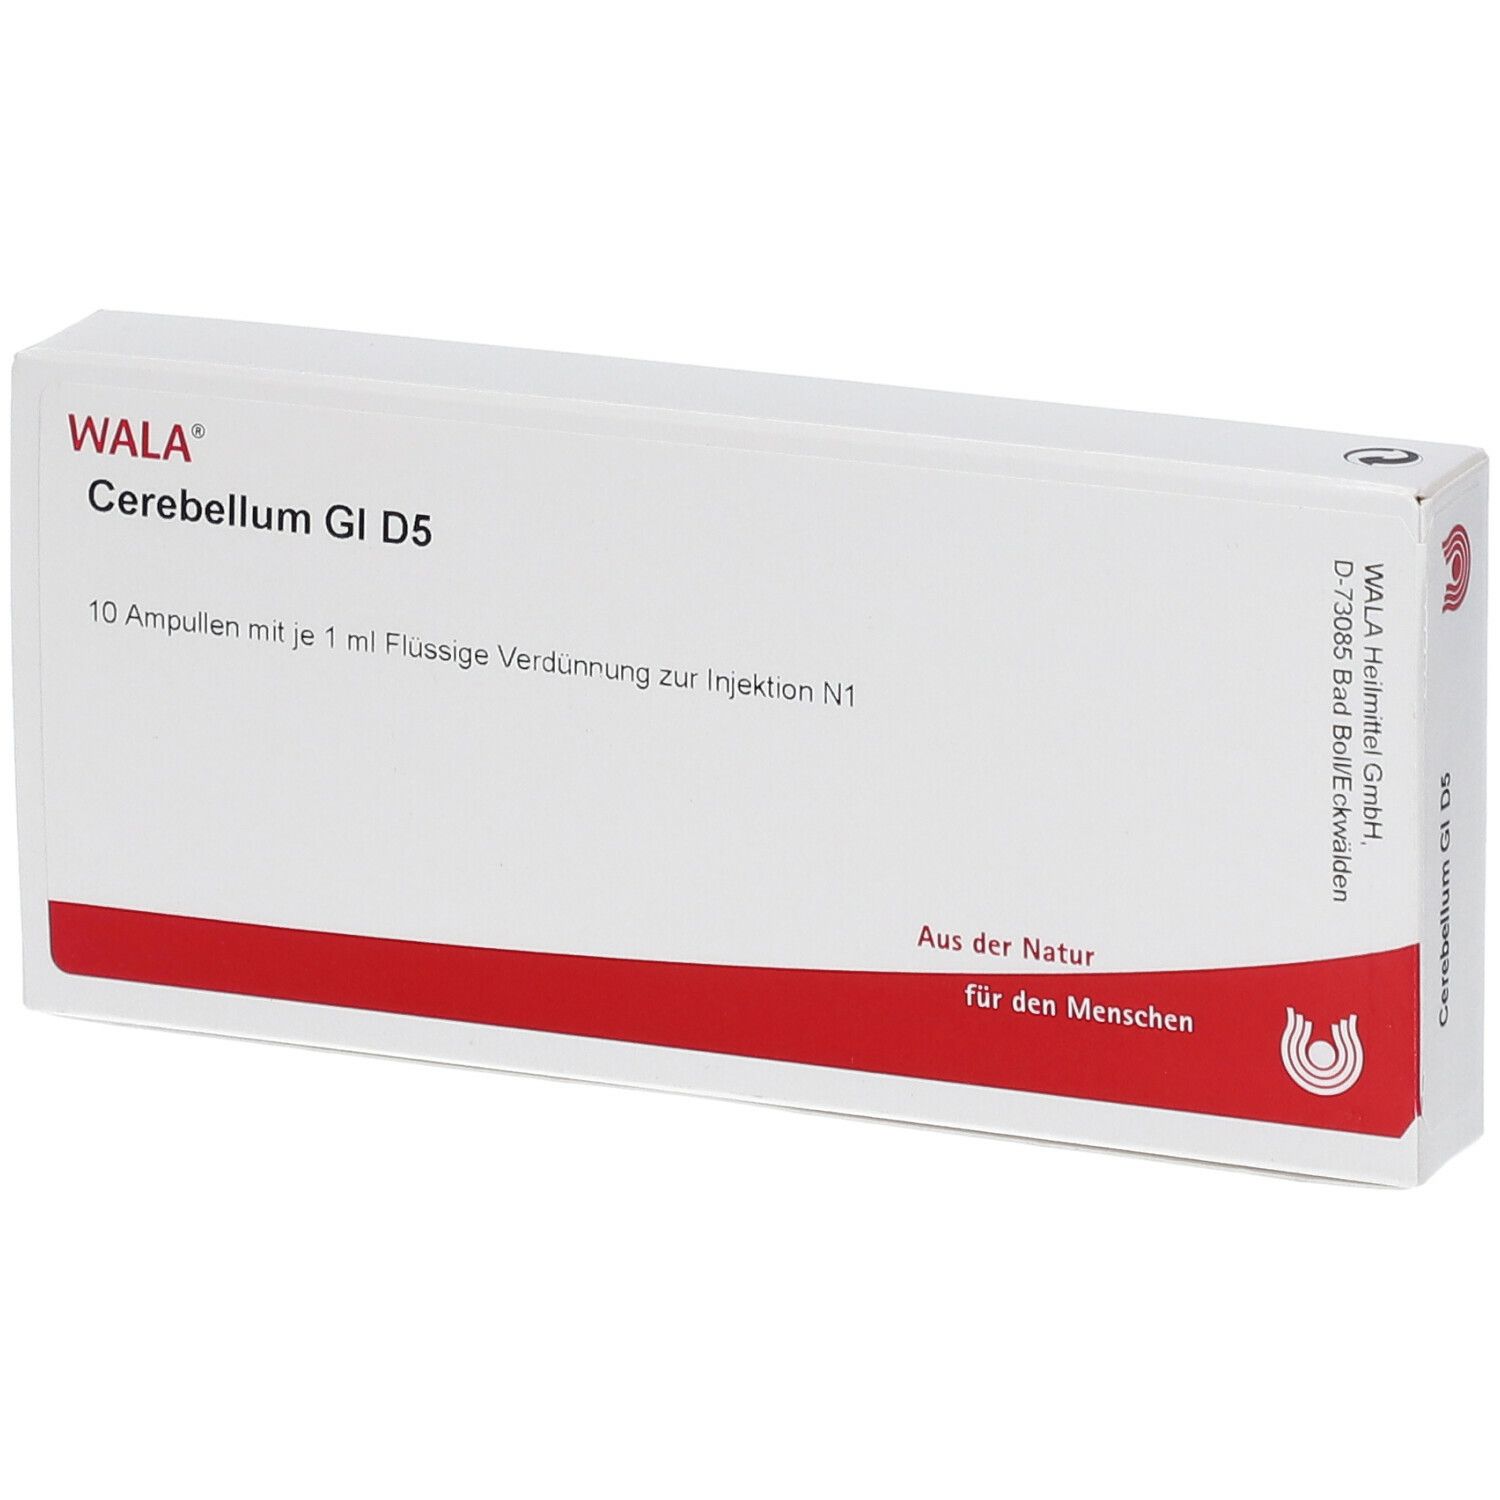 Wala® Cerebellum Gl D 5